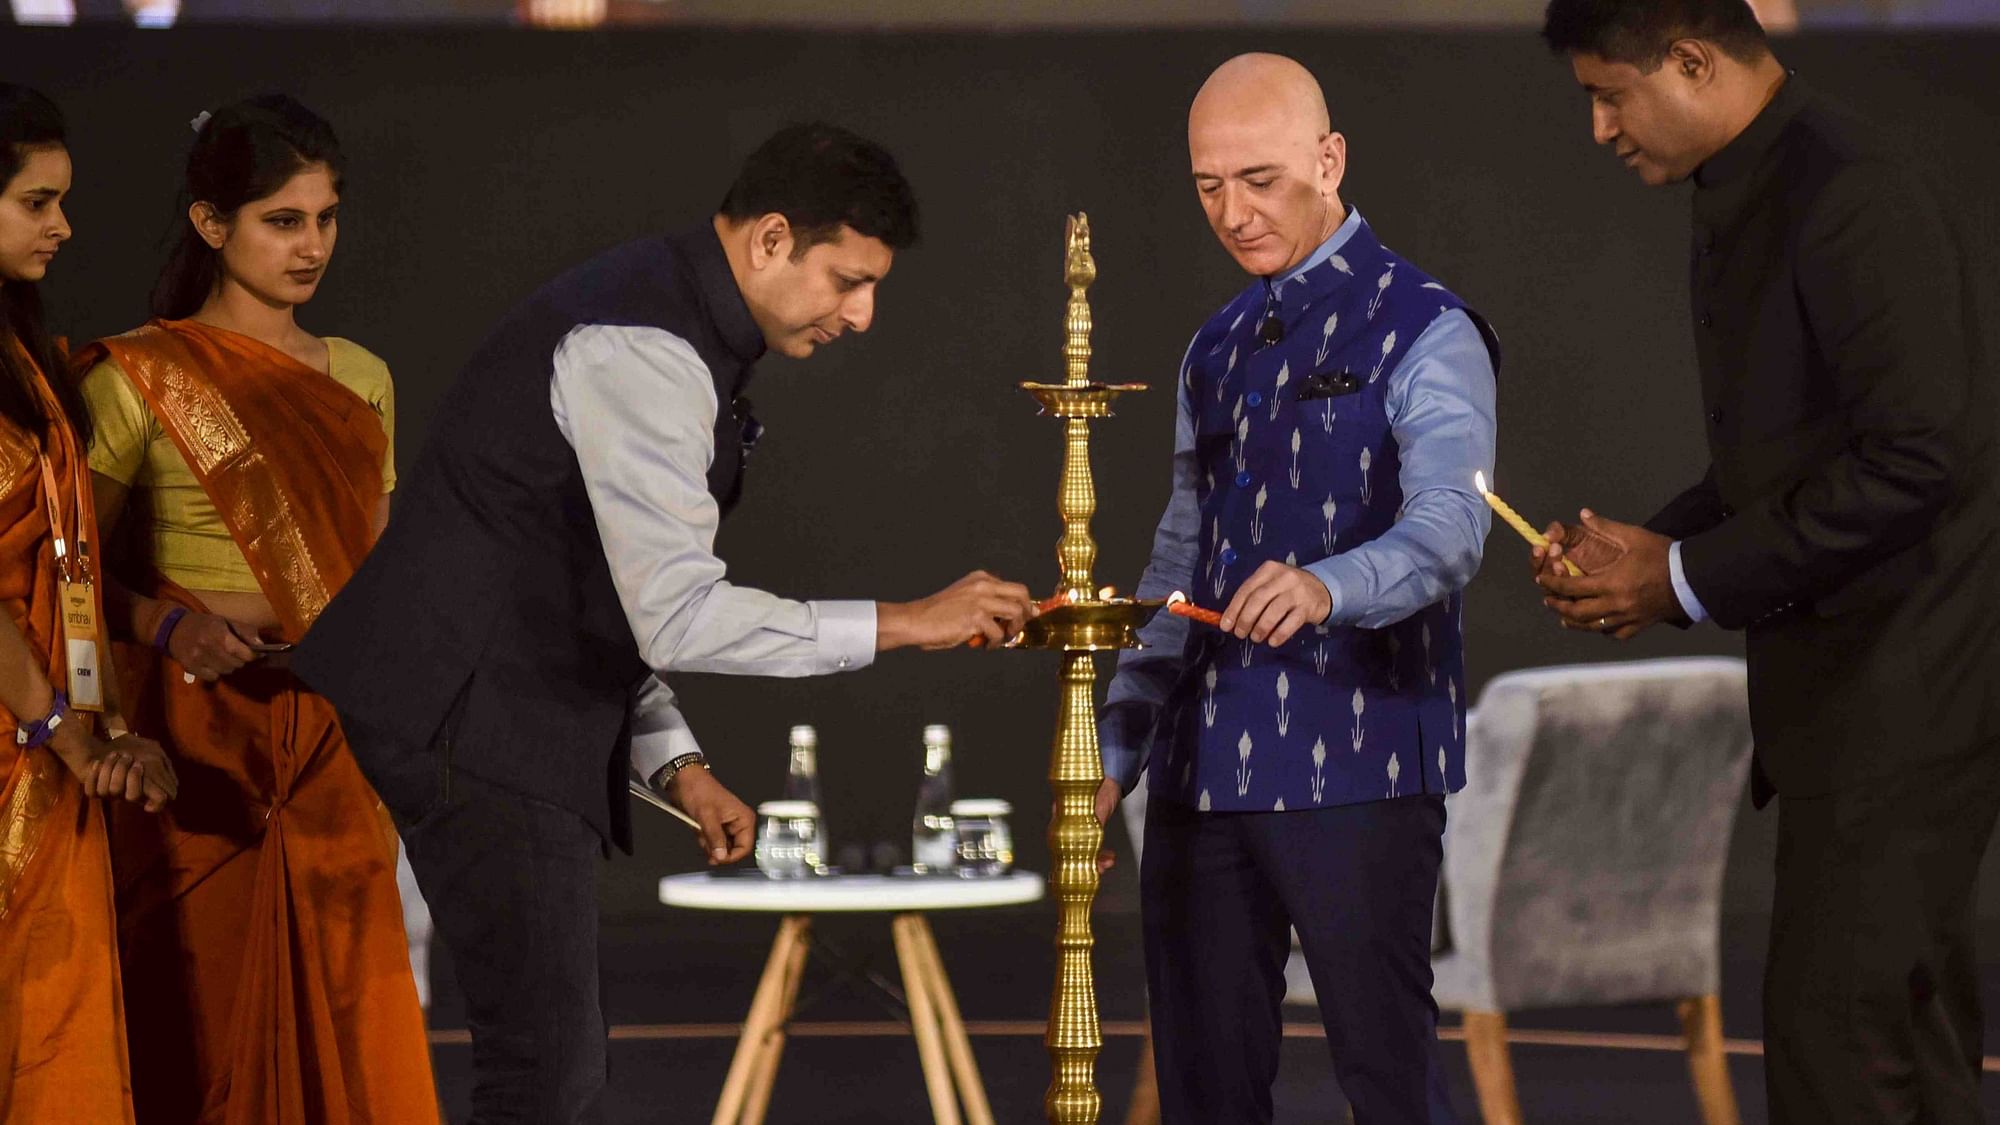 Amazon chief Jeff Bezos lights the ceremonial lamp with Amazon Global Senior Vice President Amit Agarwal during Amazon SMBhav summit in Delhi on 15 January.